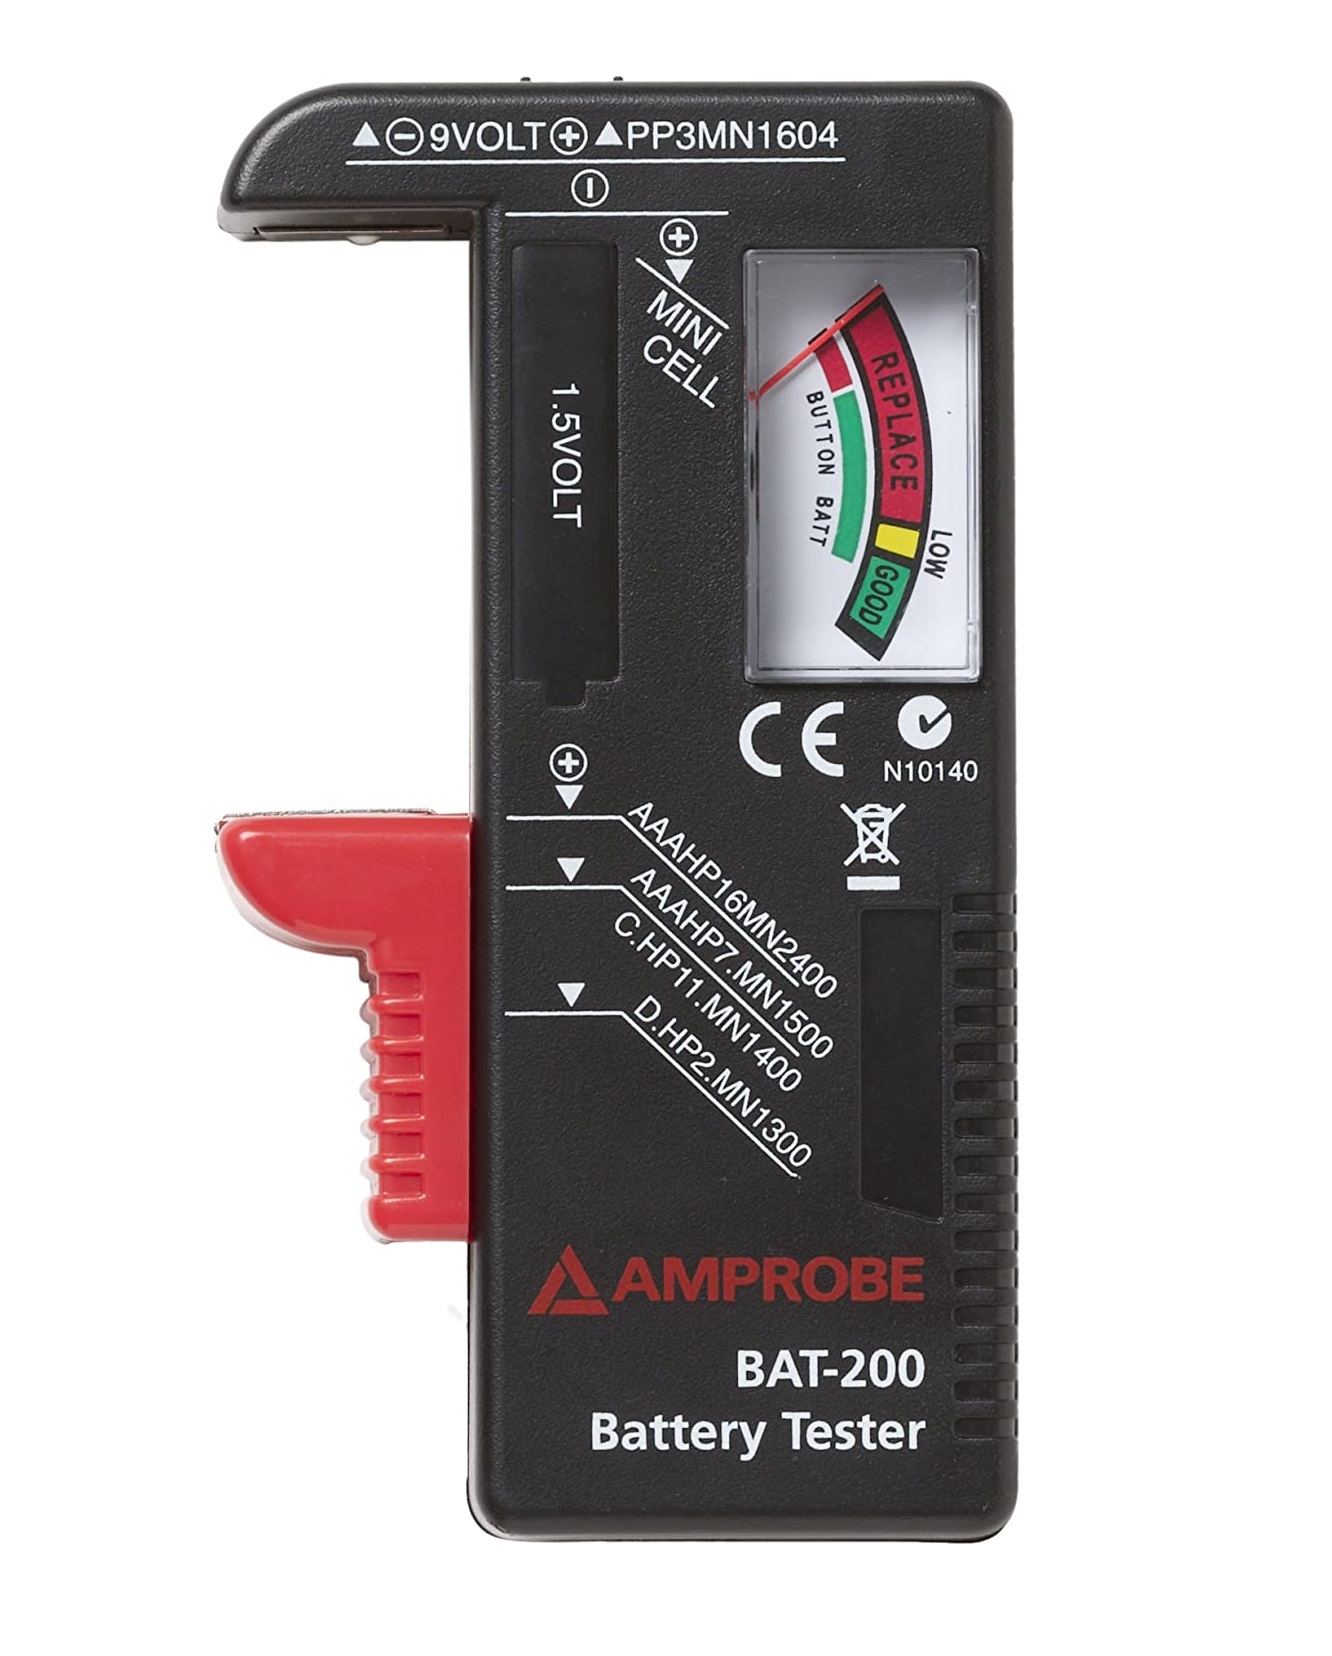 Amprobe Bat 200 Battery tester